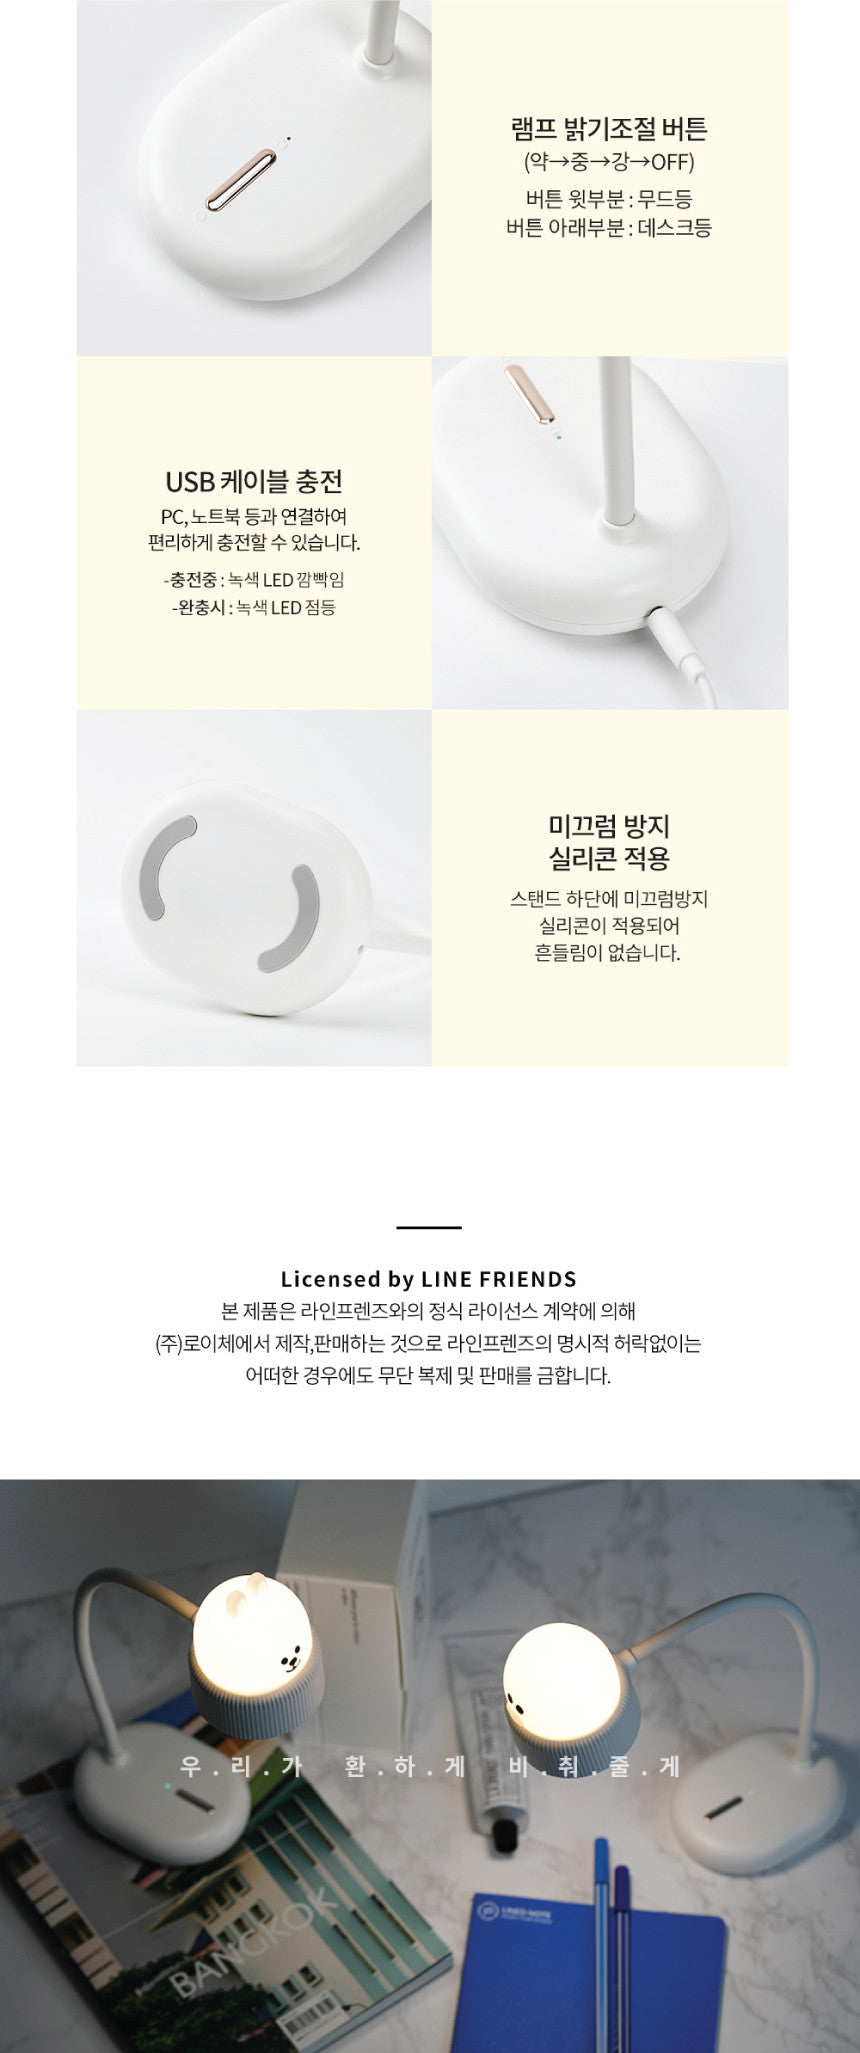 Line Friends Brown&Friends Portable Mood Lamp